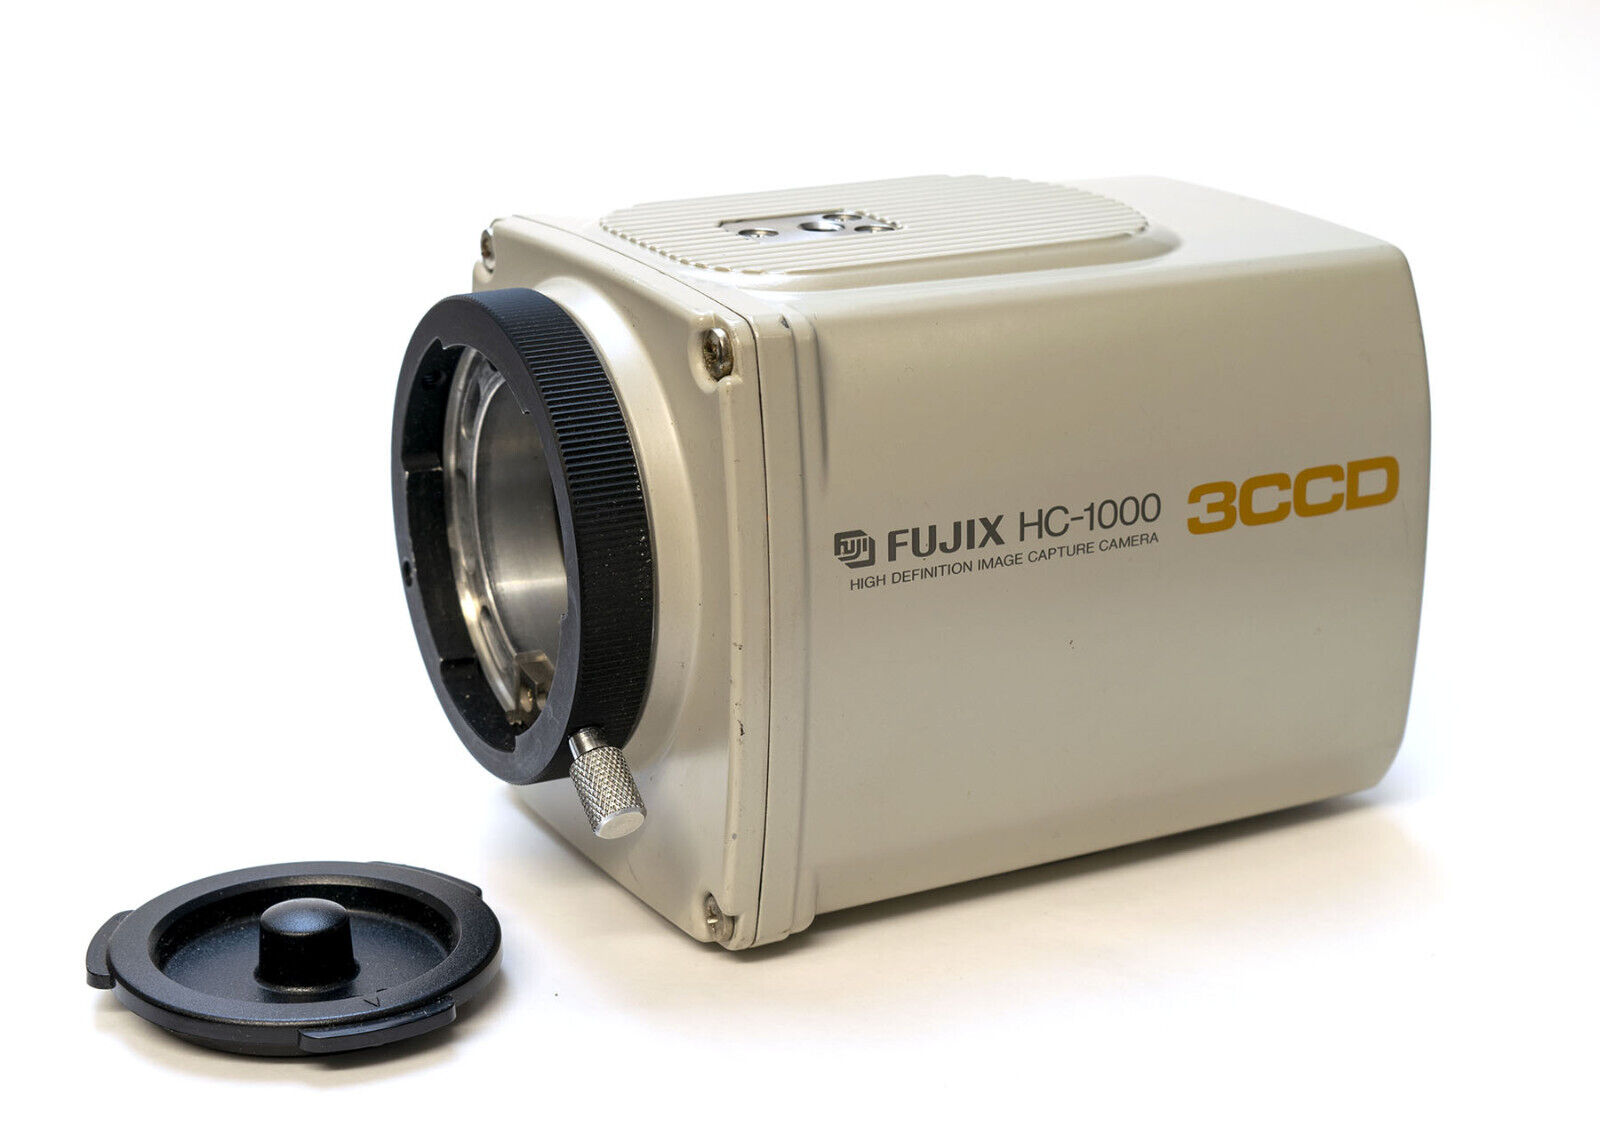 Rare Fujix Hc-1000 3ccd High Definition Image Capture Camera